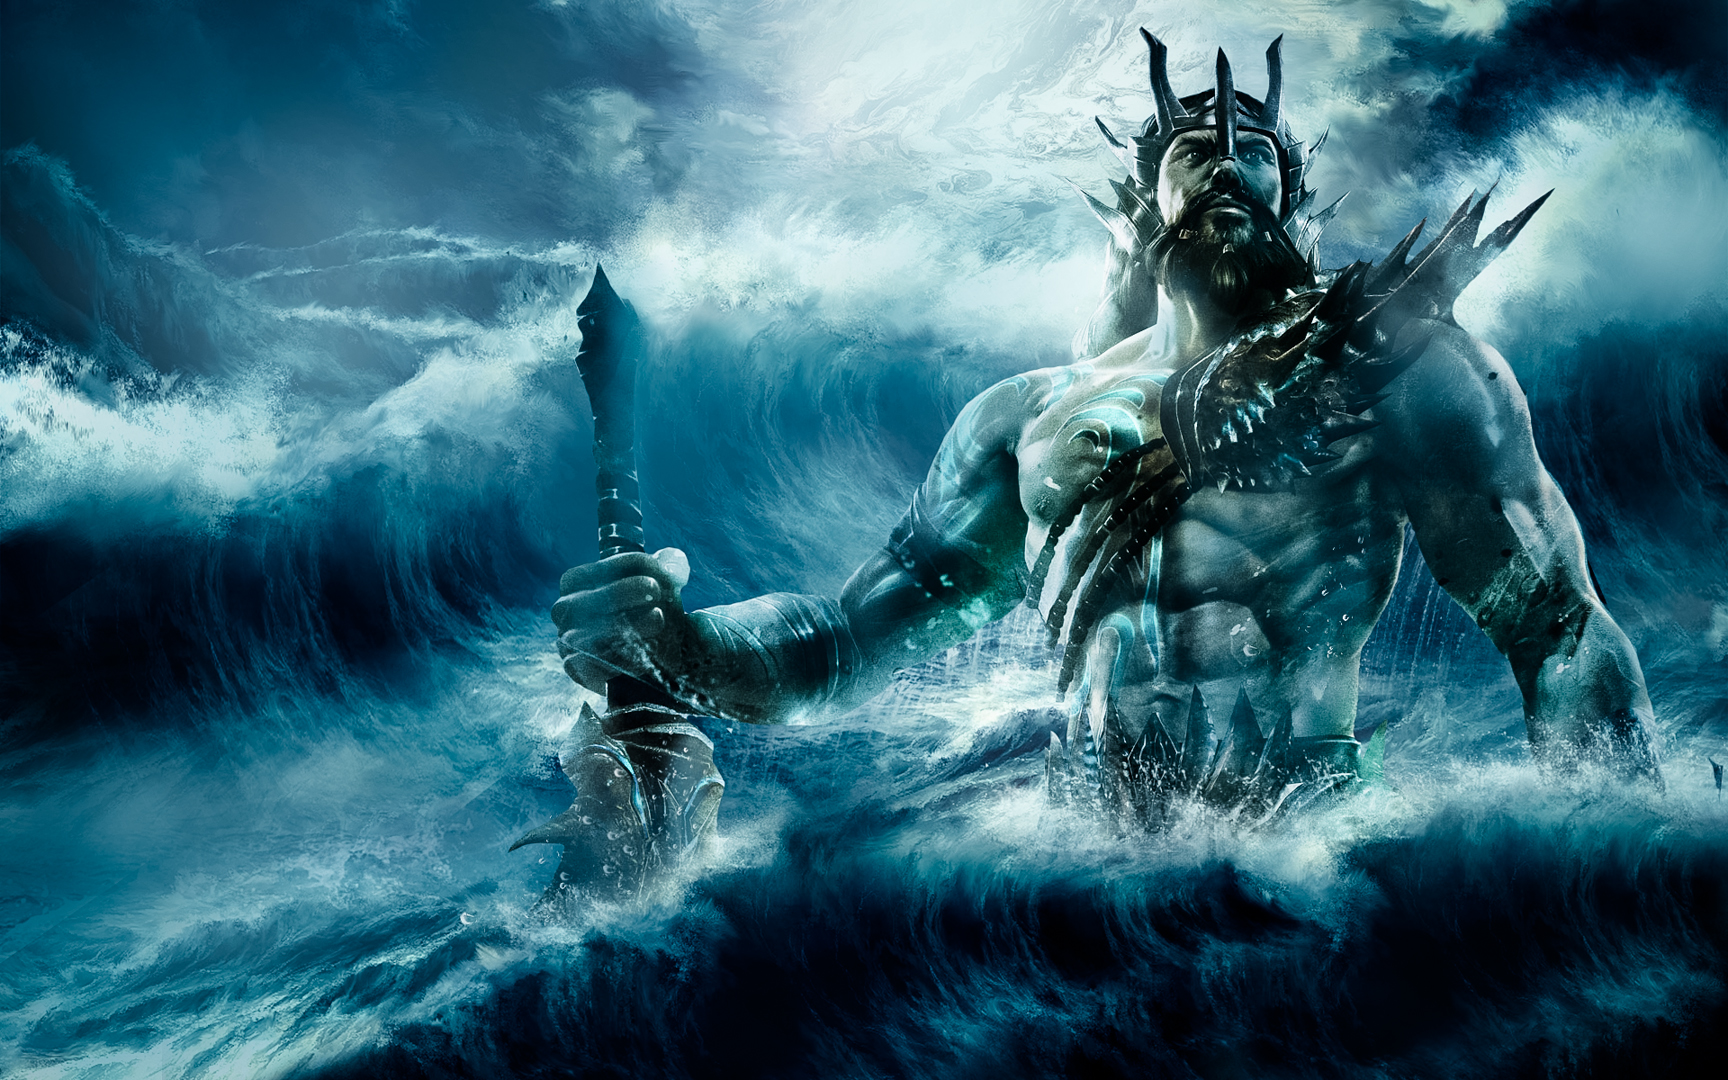 Displaying Image For Poseidon And Zeus Wallpaper